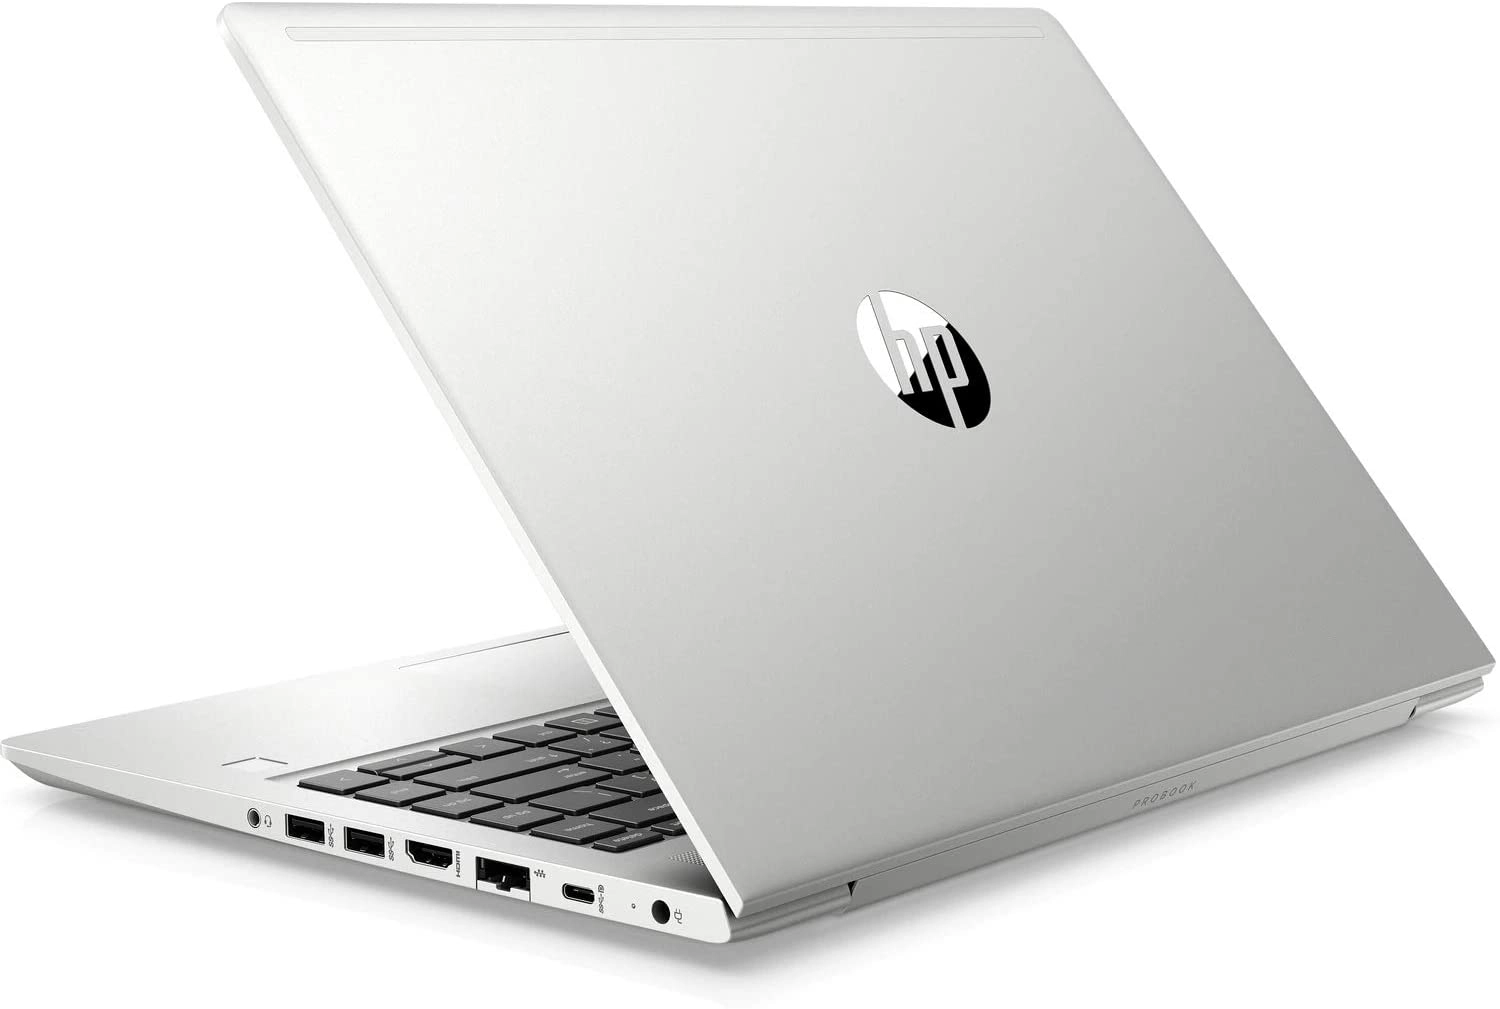 HP SBUY PB440G7 laptop image